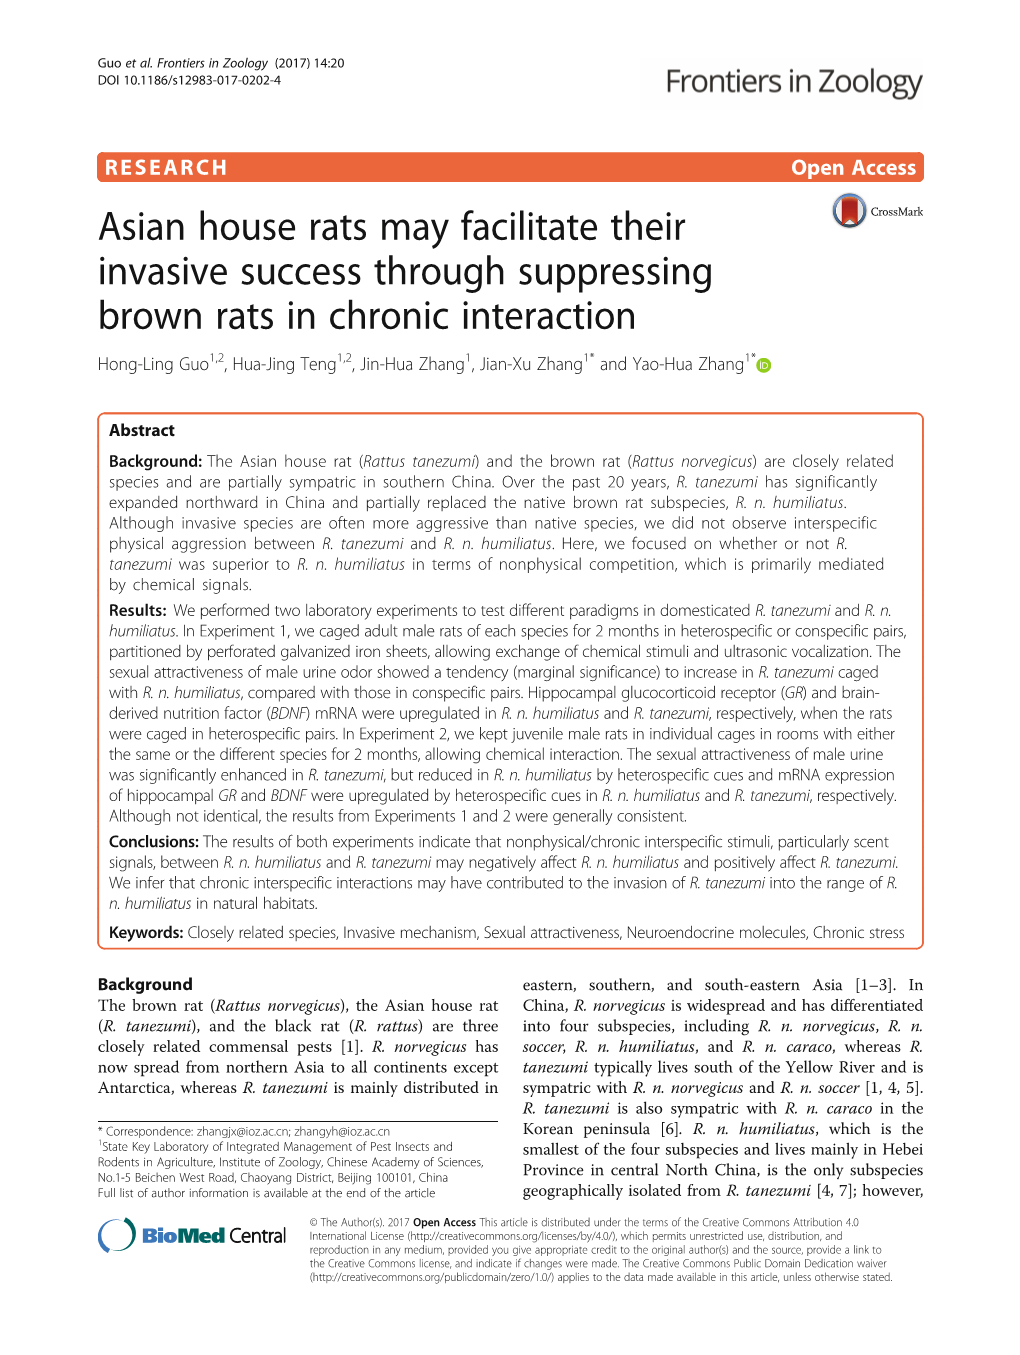 Asian House Rats May Facilitate Their Invasive Success Through